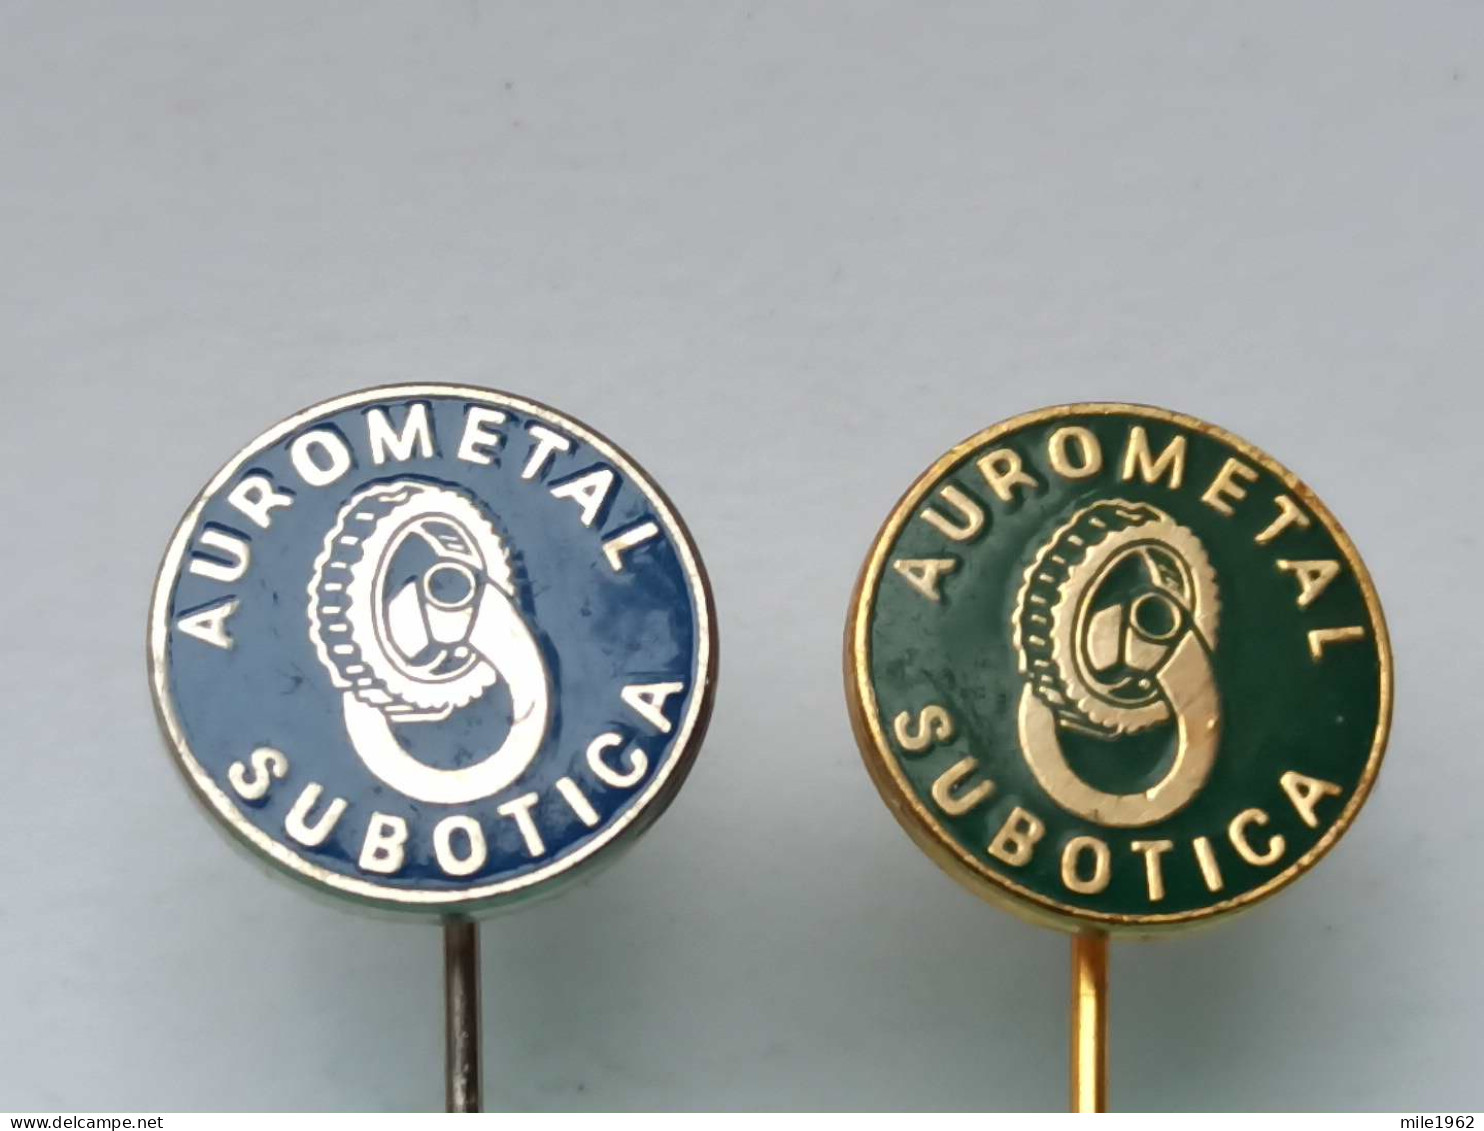 BADGE Z-98-16 - 2 PINS - AUROMETAL Subotica Goldsmith, Watchmaker Watch, Bijoutier Joaillier, Jeweler, Goldsmith - Lots